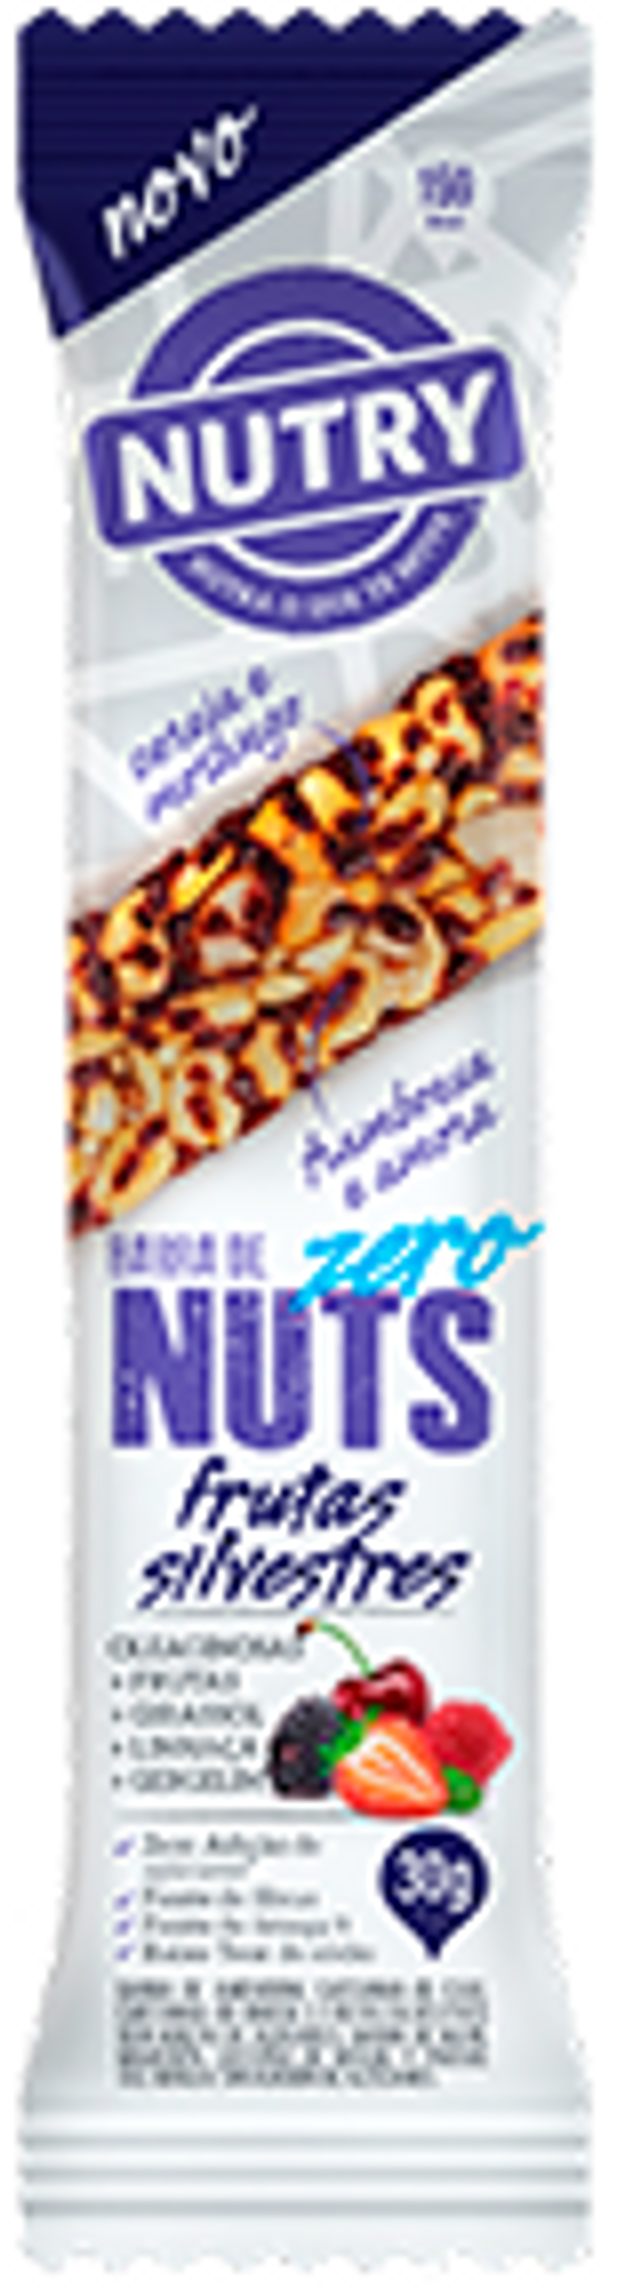 7891331018276 - BARRA DE NUTS FRUTAS SILVESTRES NUTRY PACOTE 30G